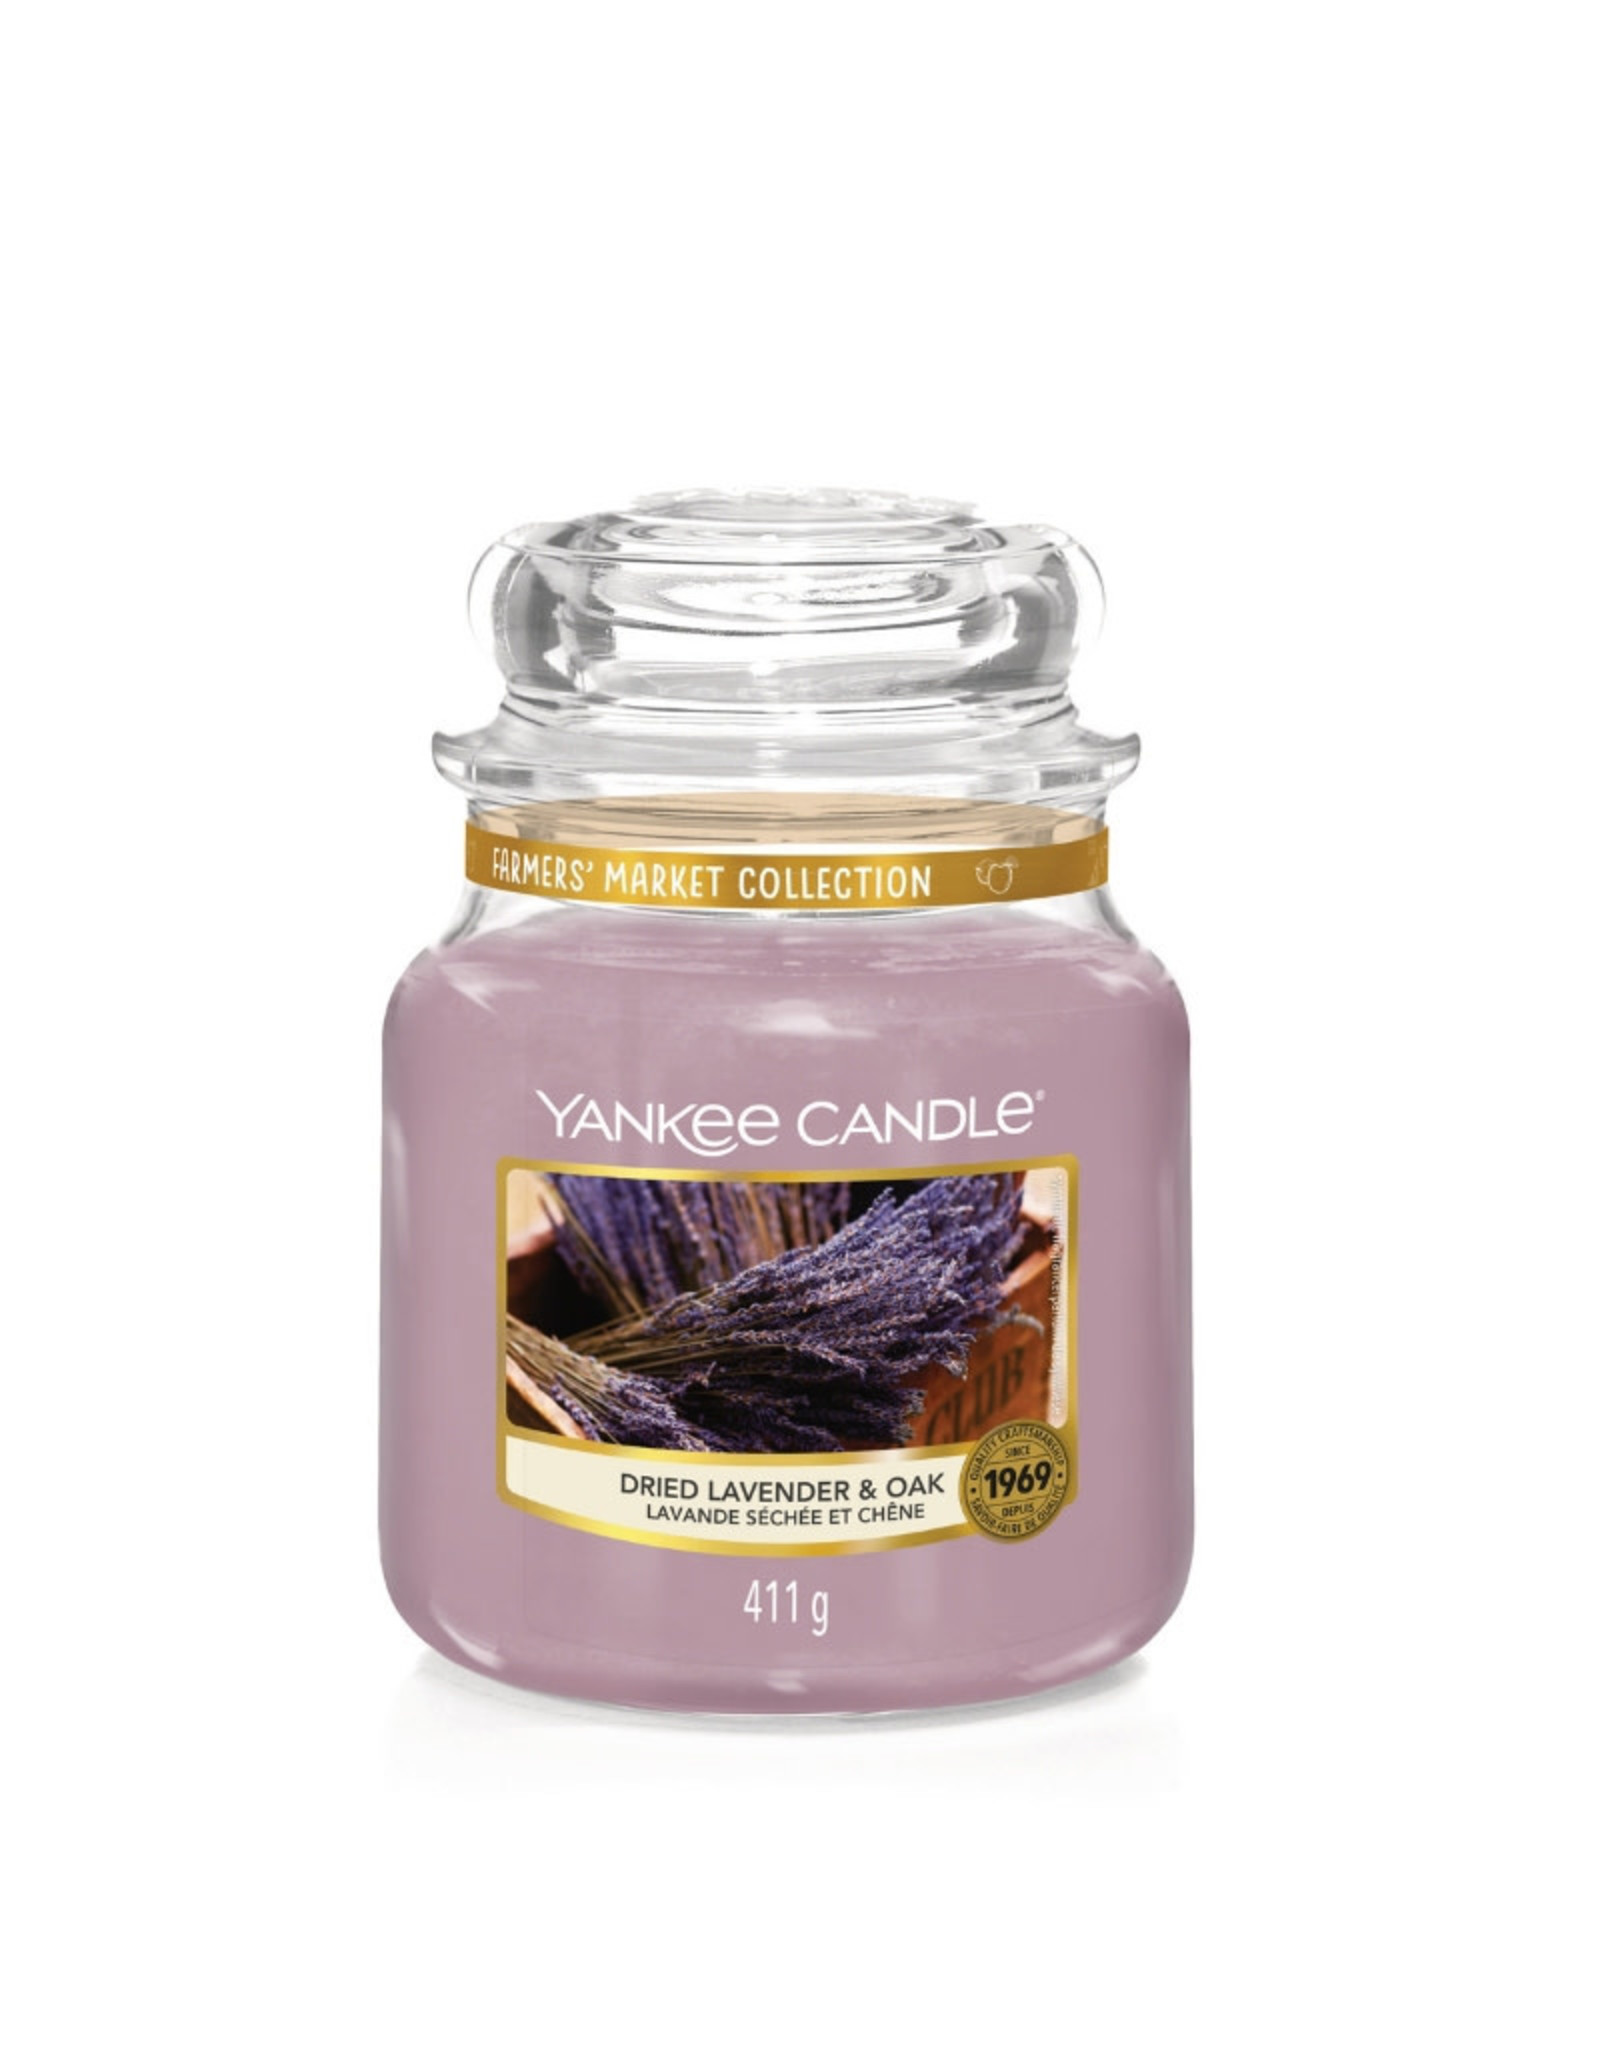 Yankee Candle Dried Lavender & Oak - Medium jar